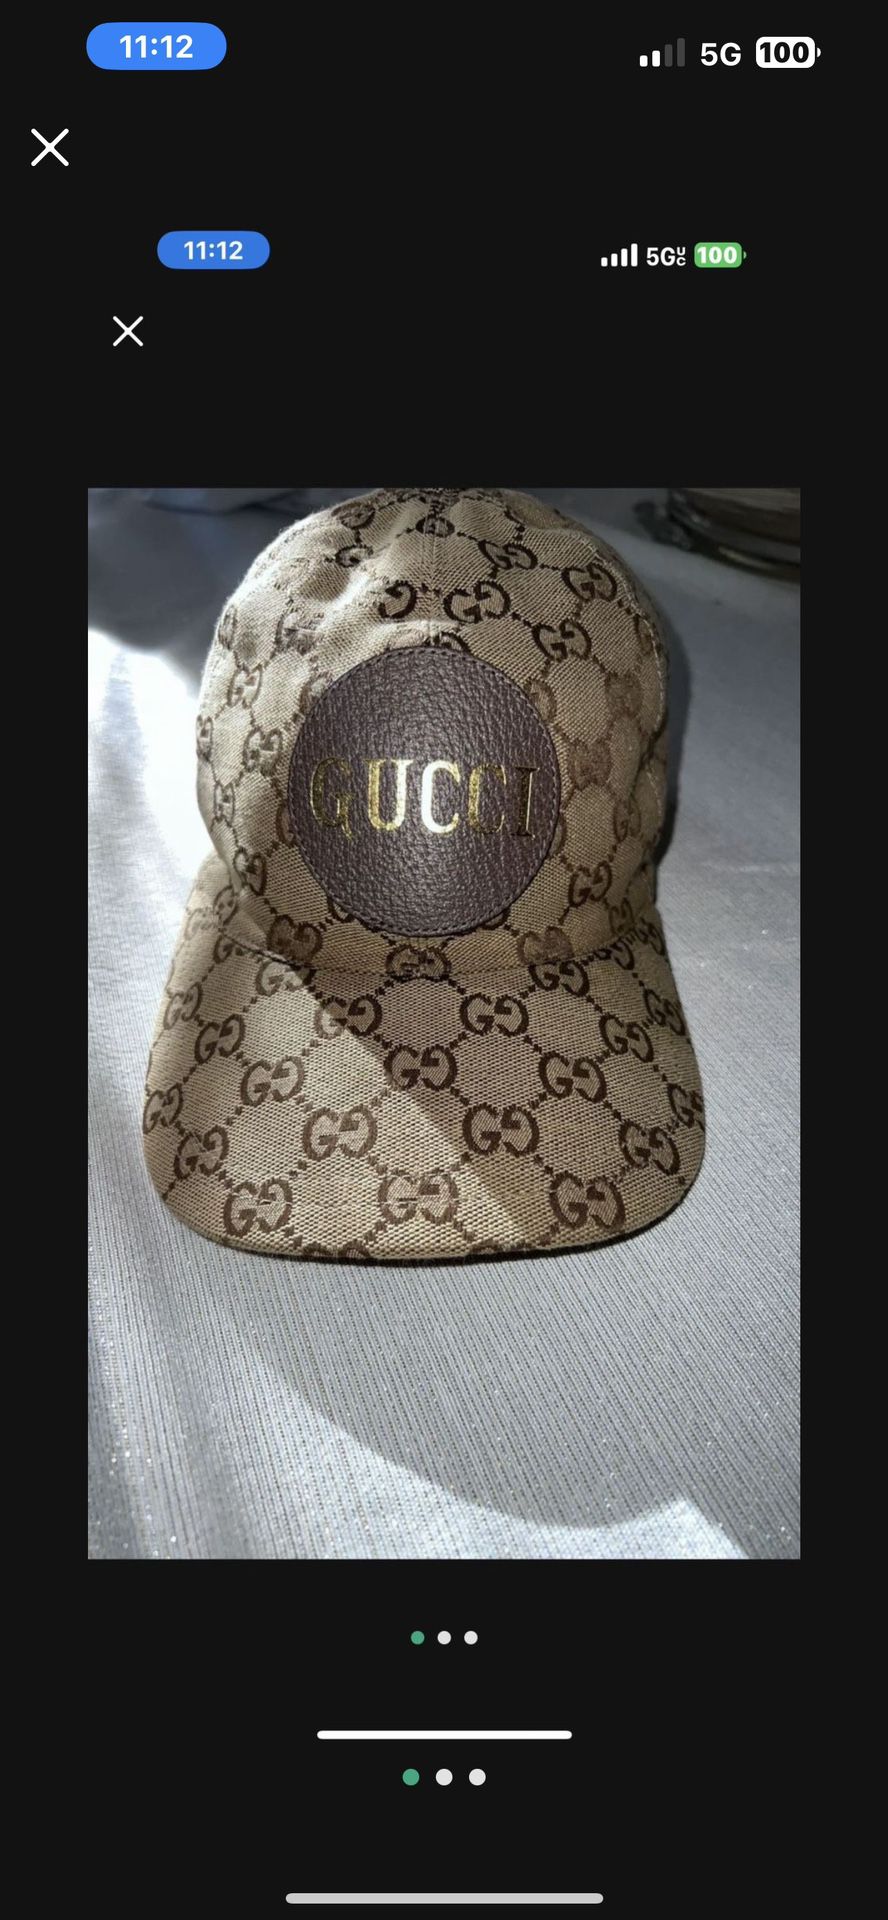 Gucci Hat Size Medium 